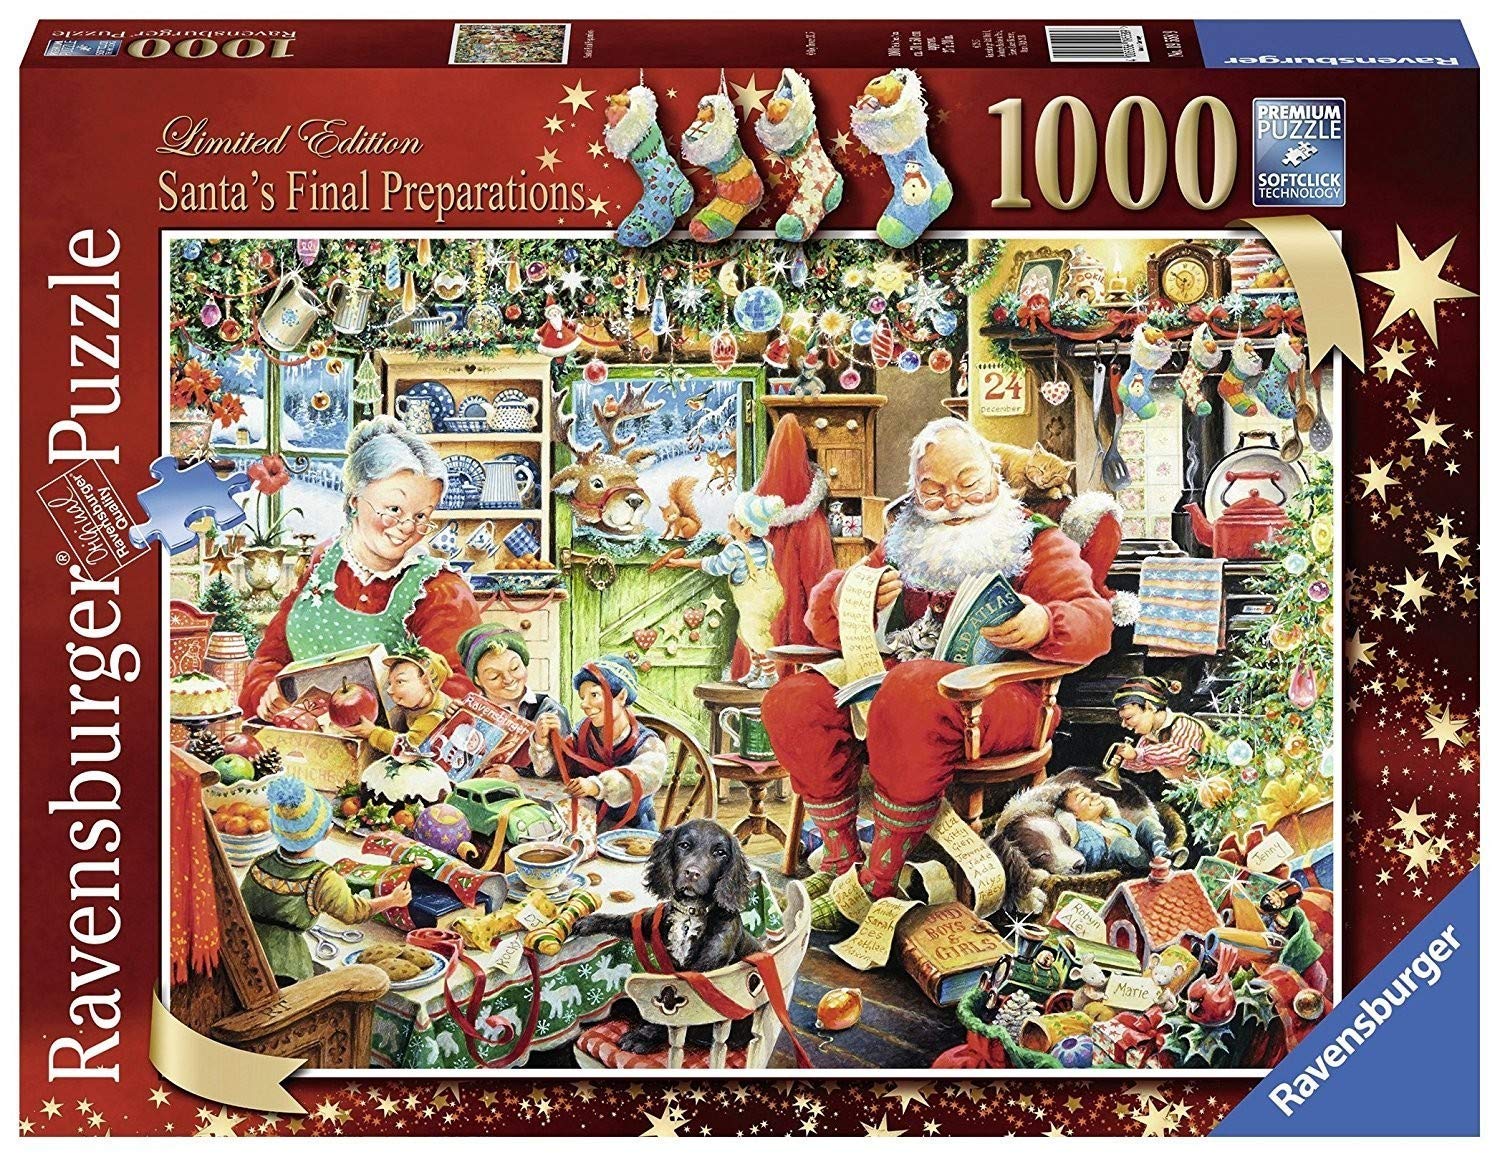 Ravensburger Limited Edition Santas Final Preparations Piece Jigsaw Puzzle